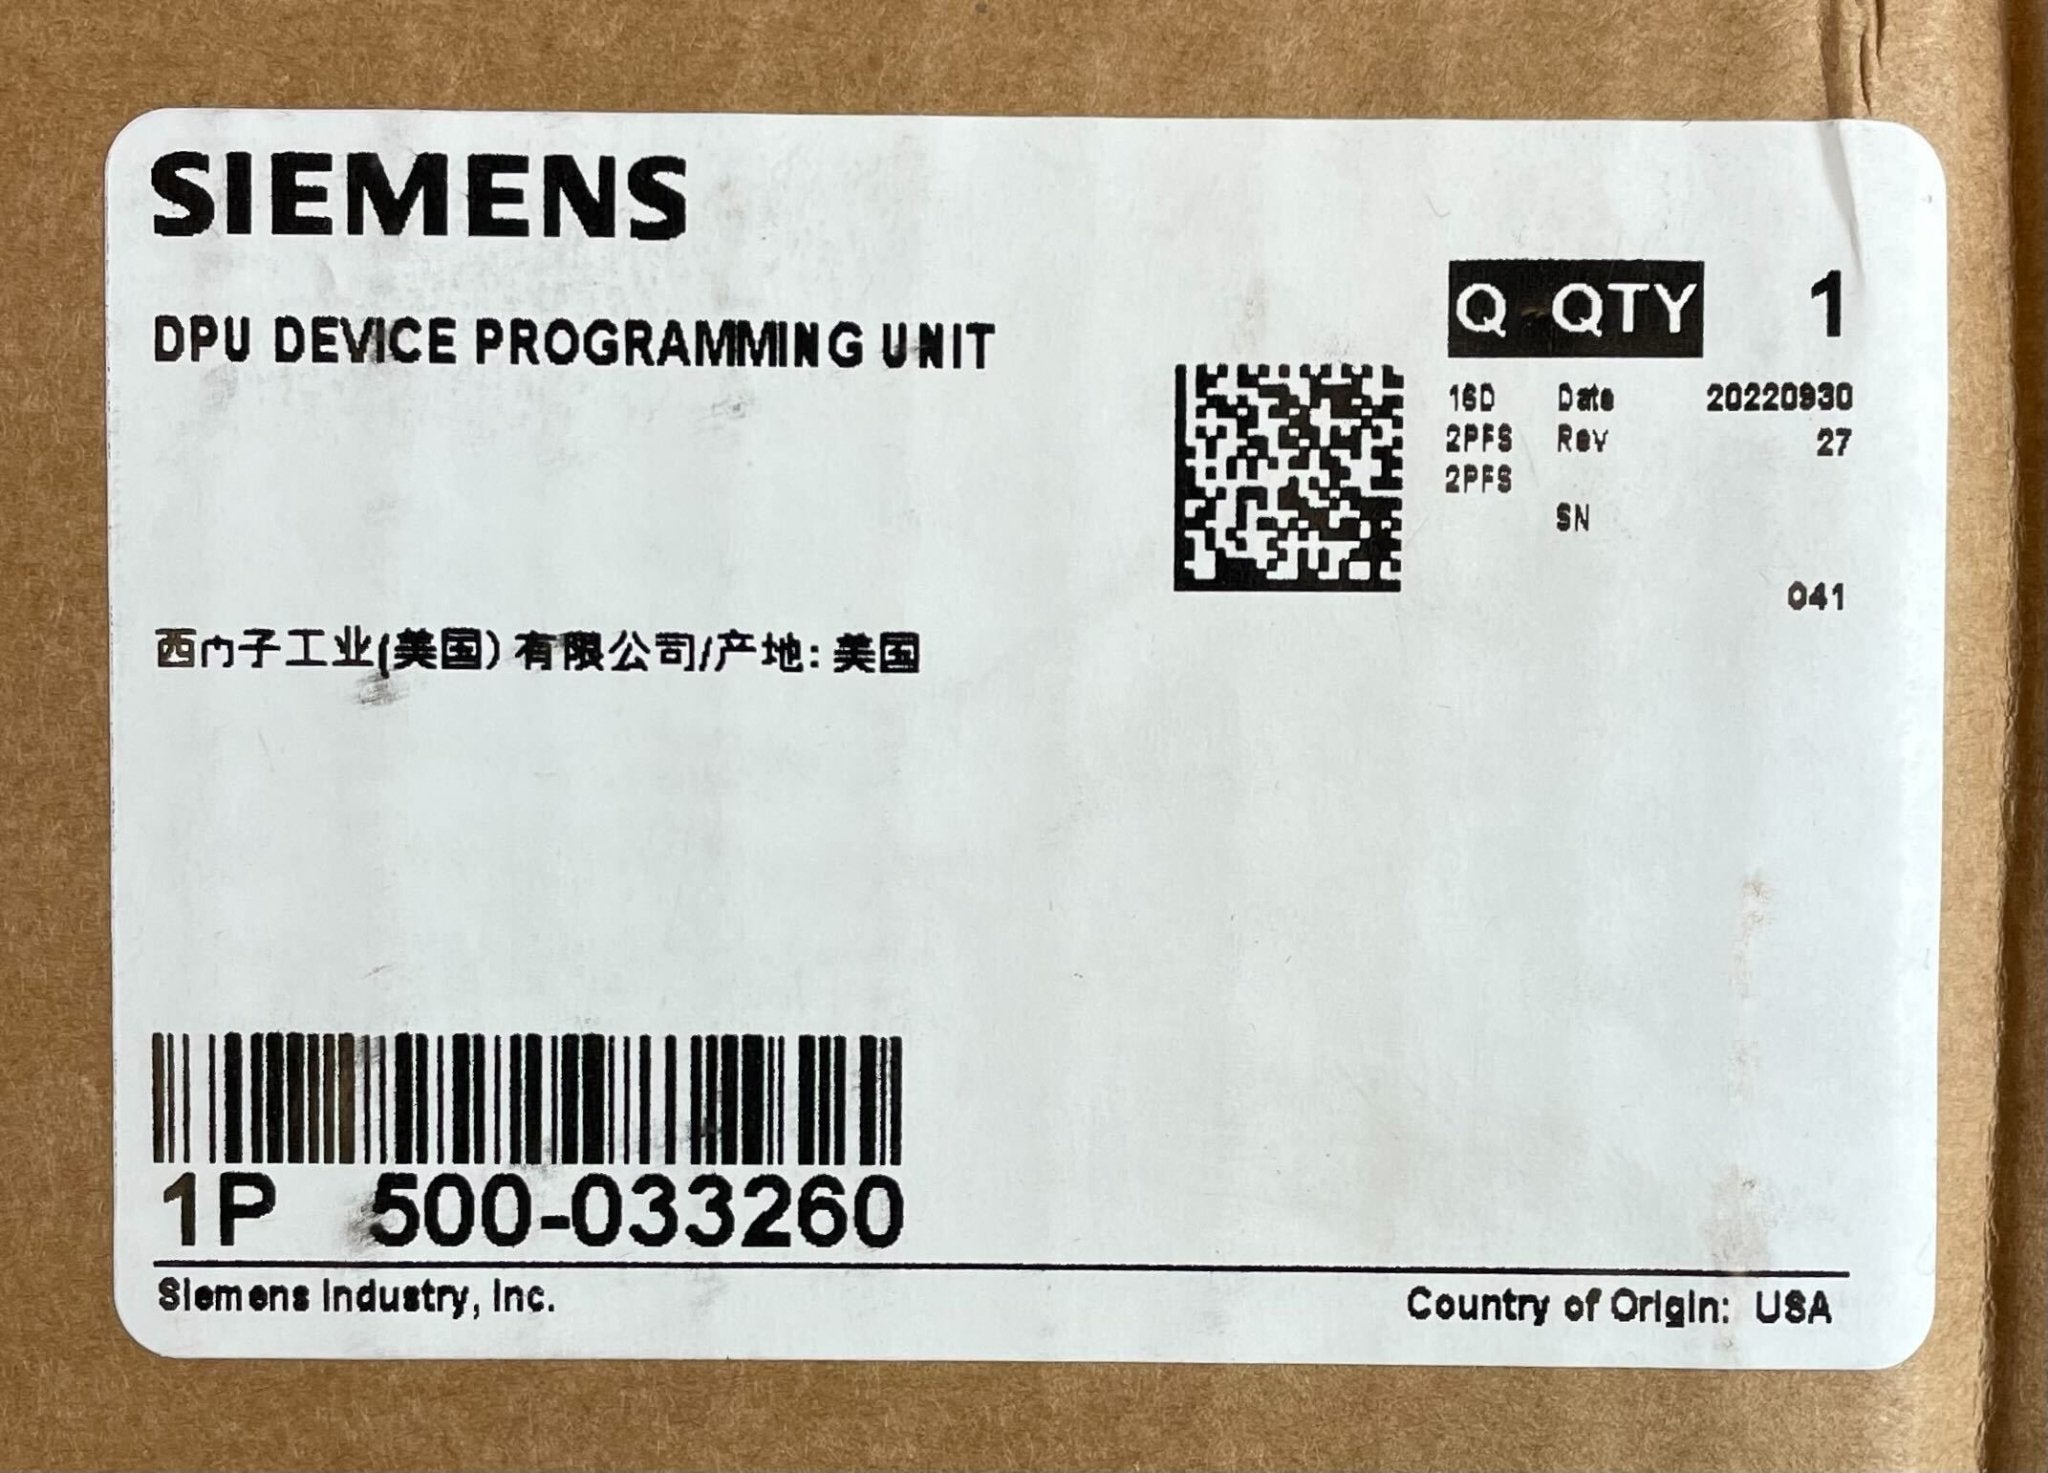 Siemens DPU - The Fire Alarm Supplier